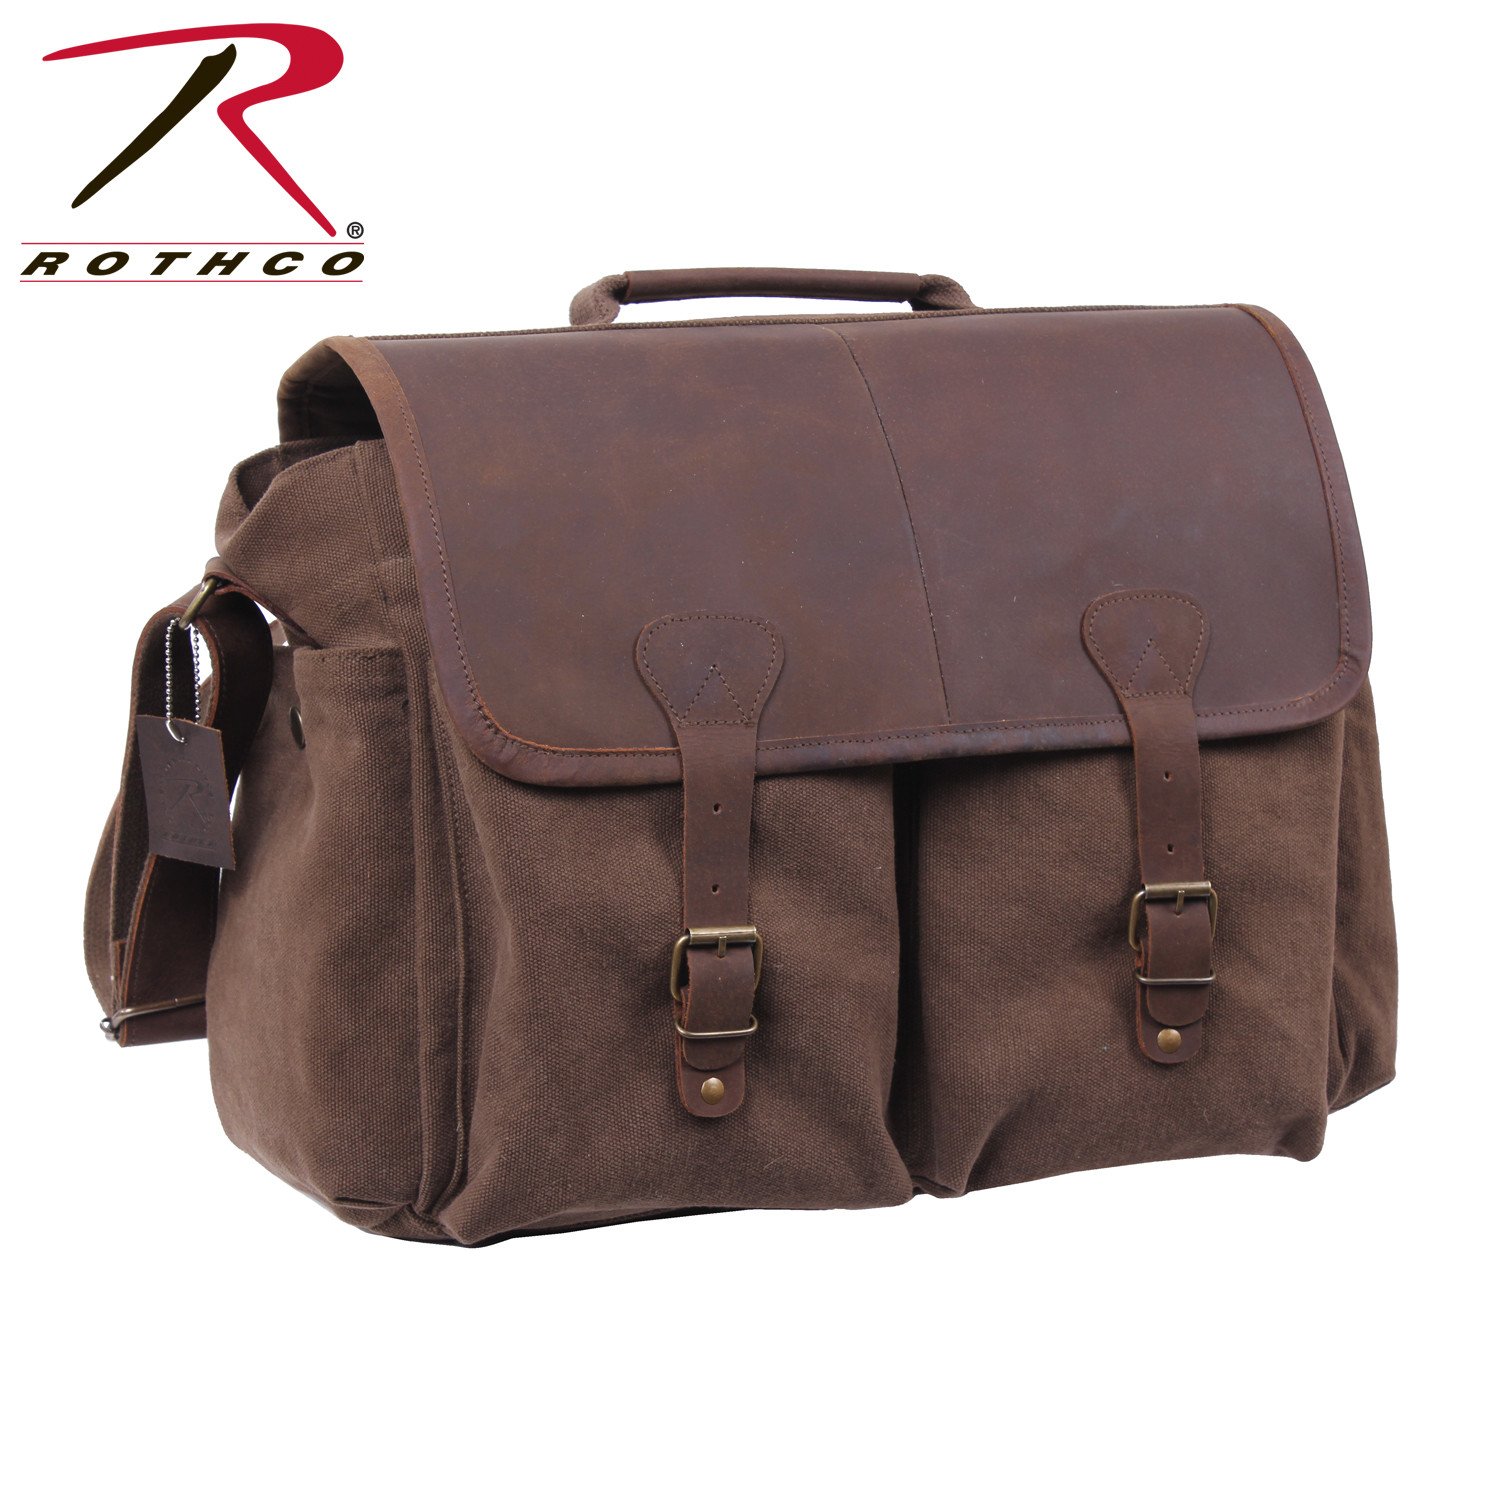 Rothco Vintage Leather Flap Messenger Bag - Item # 9829/9828 - 2 Colors Brown & Khaki